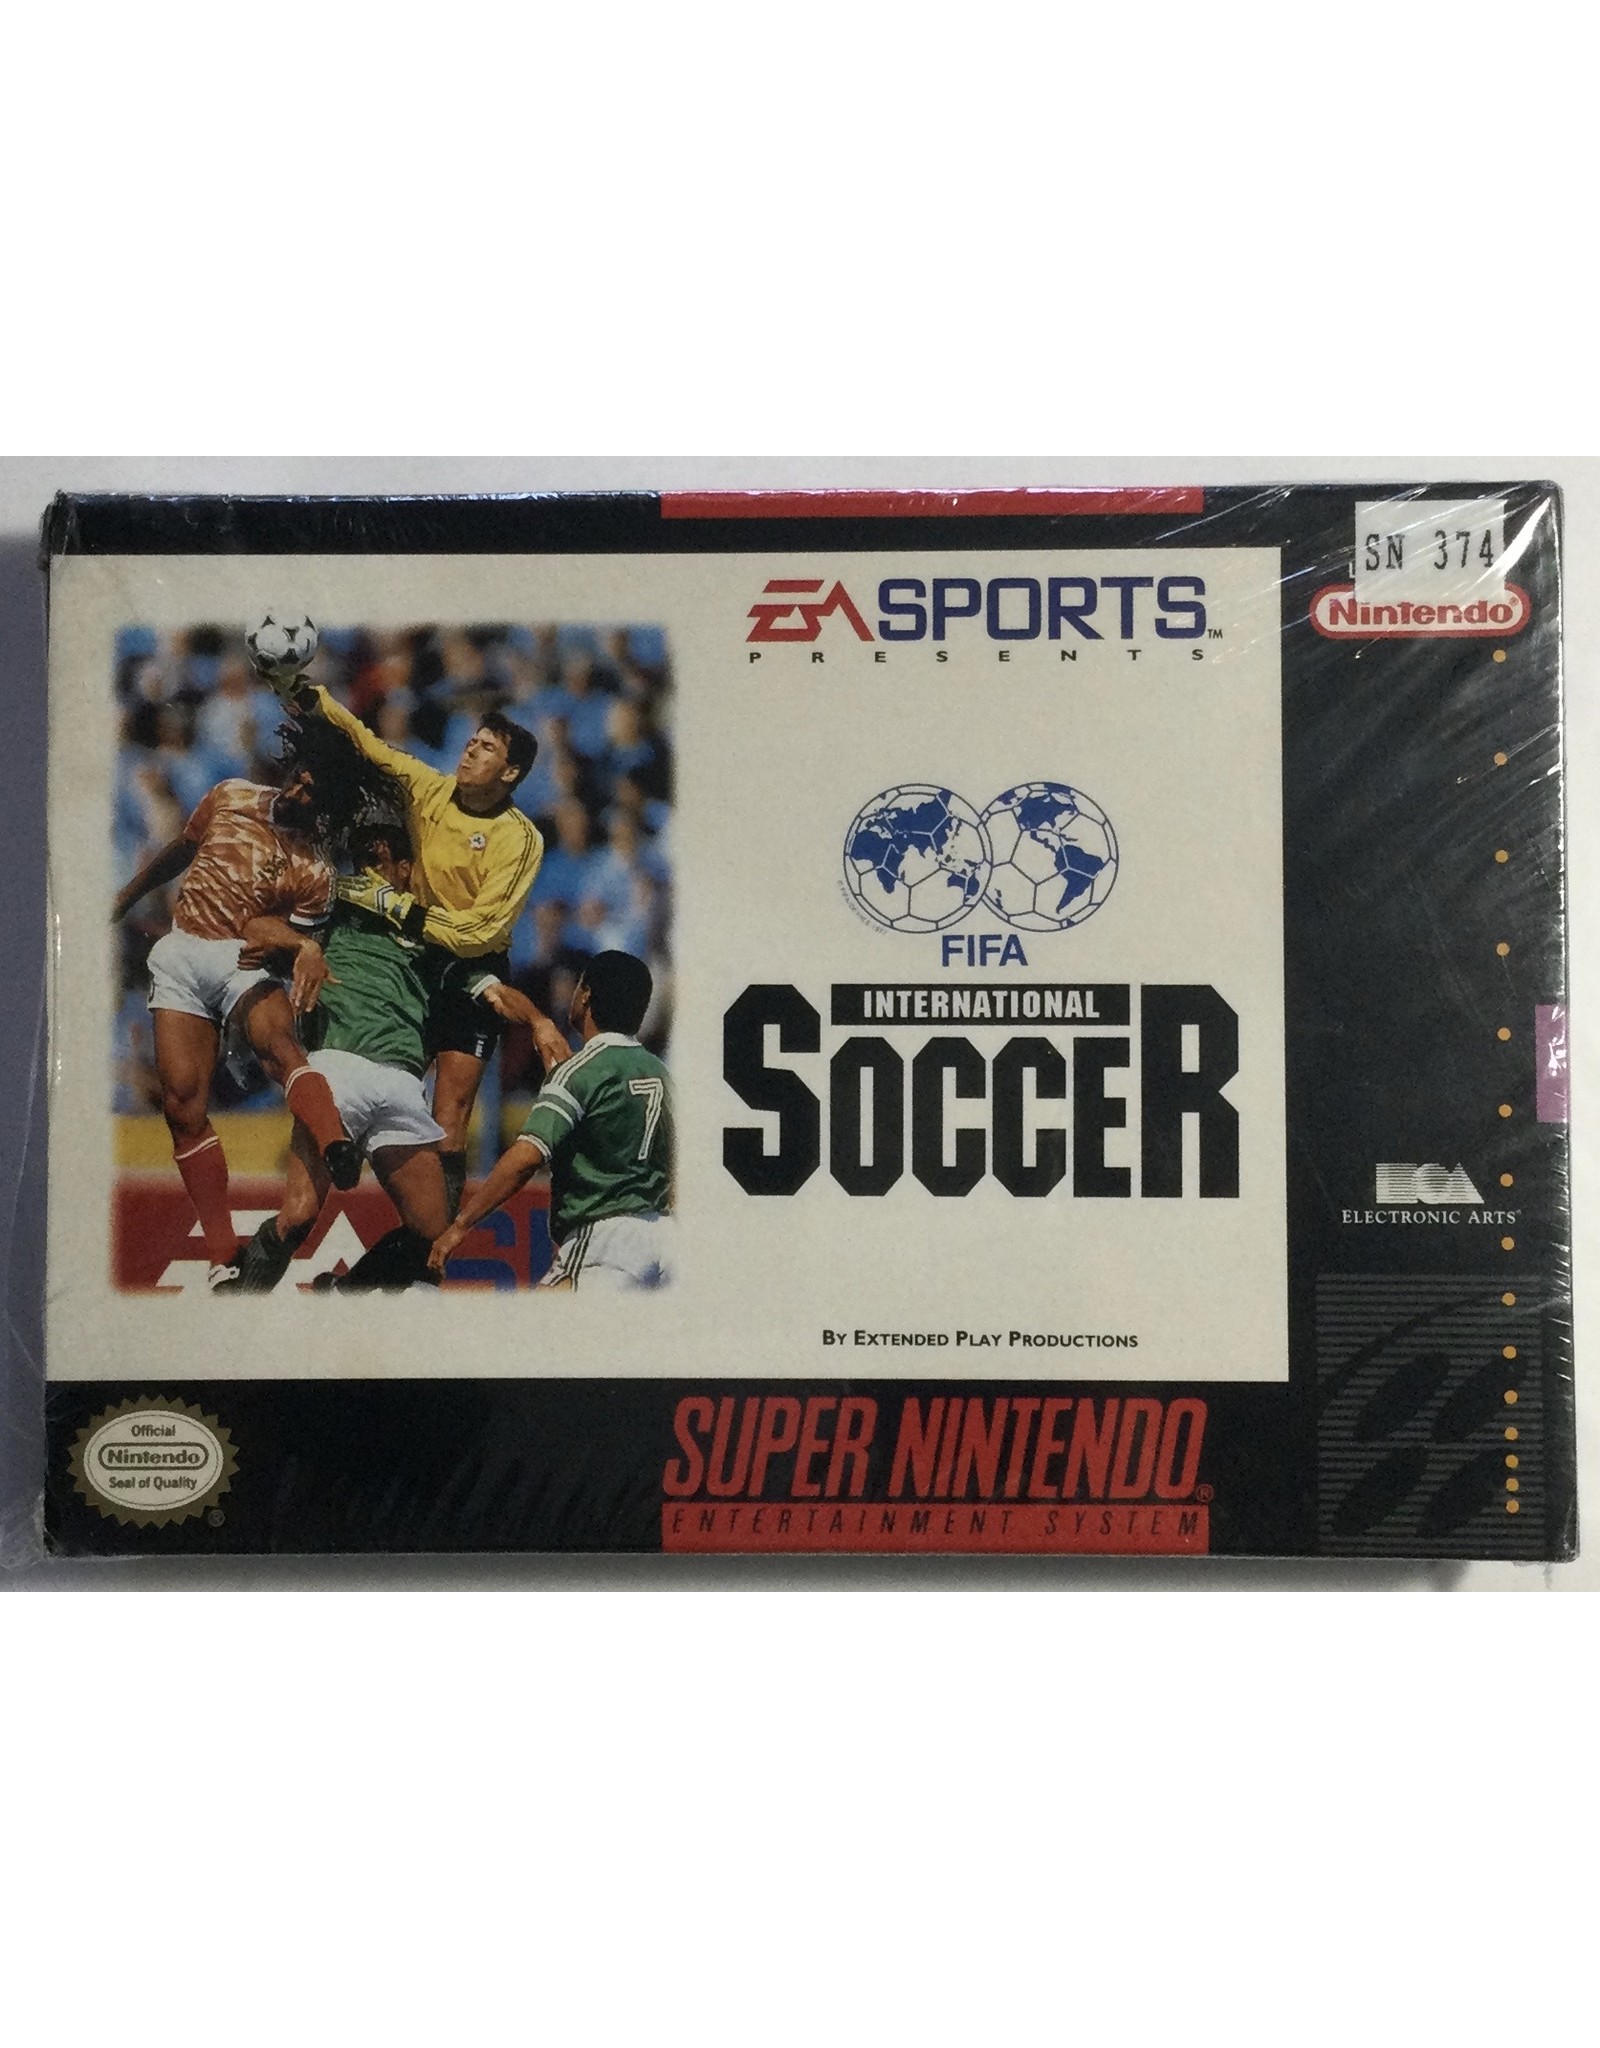 EA SPORTS FIFA International Soccer for Super Nintendo Entertainment System (SNES) - CIB